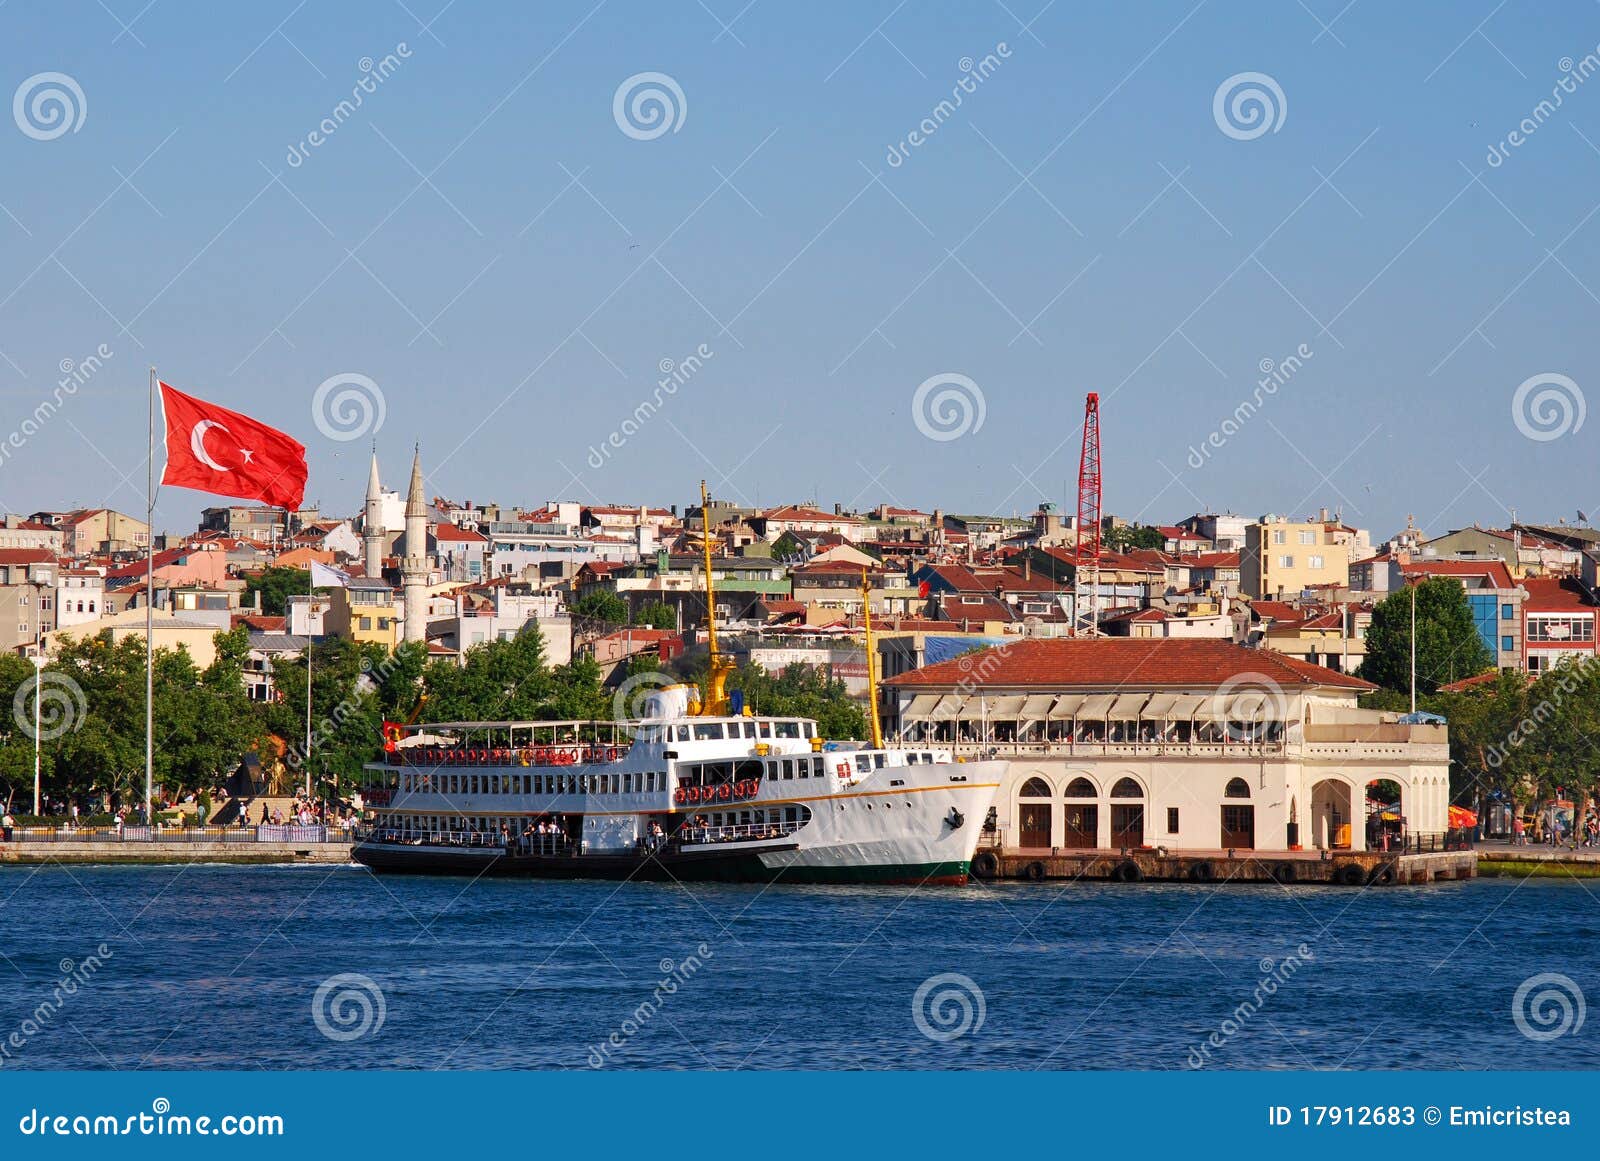 kadikoy harbour in istanbul